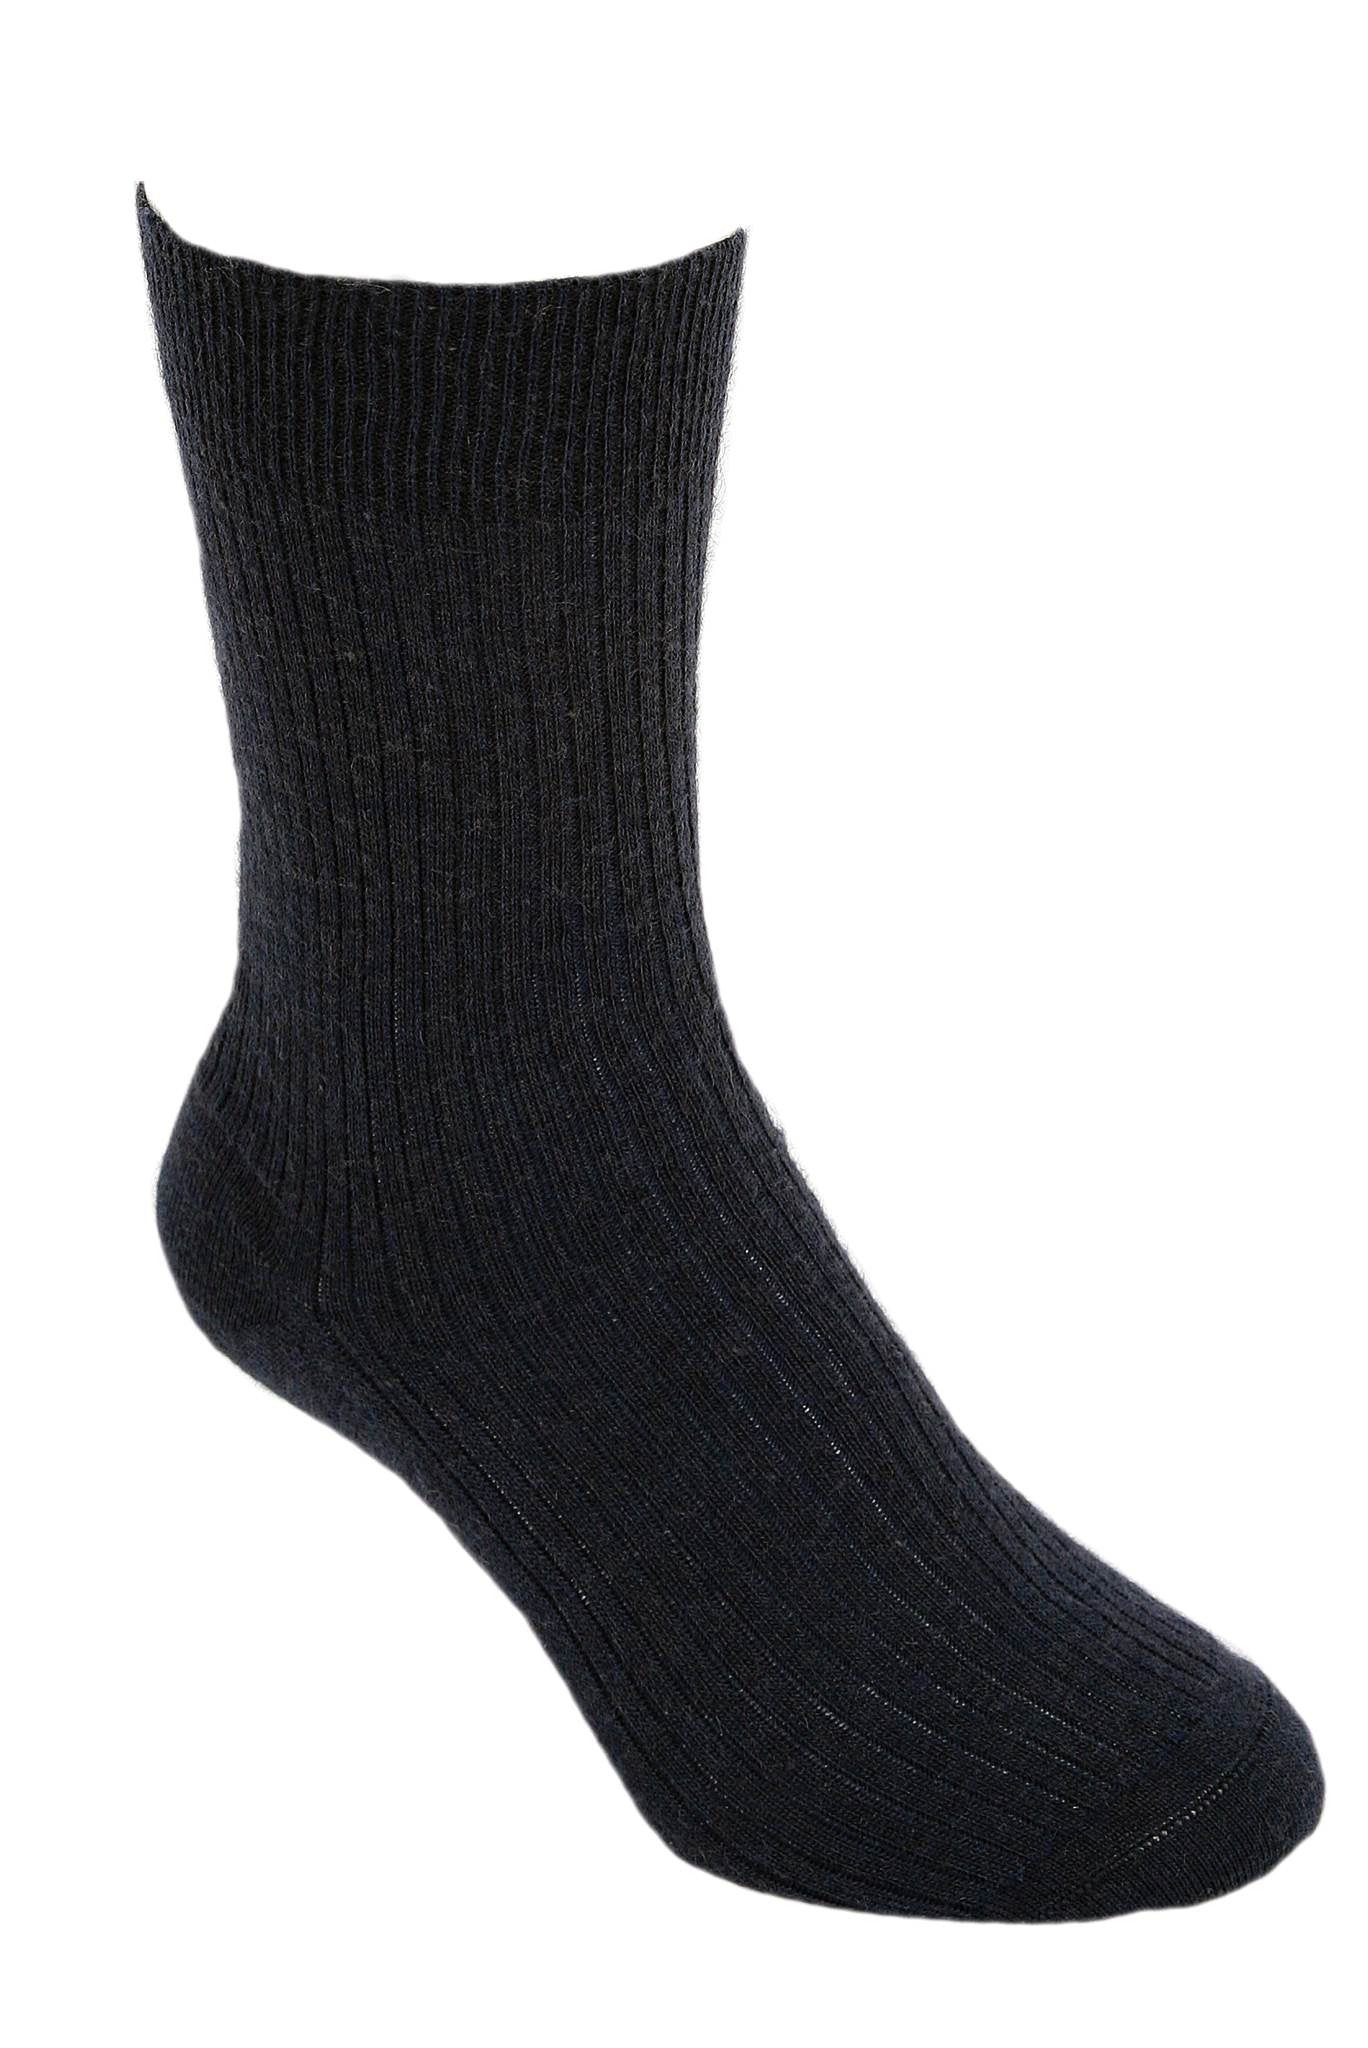 100% Merino Wool Dress Sock, made in NZ – Wools of Wanaka